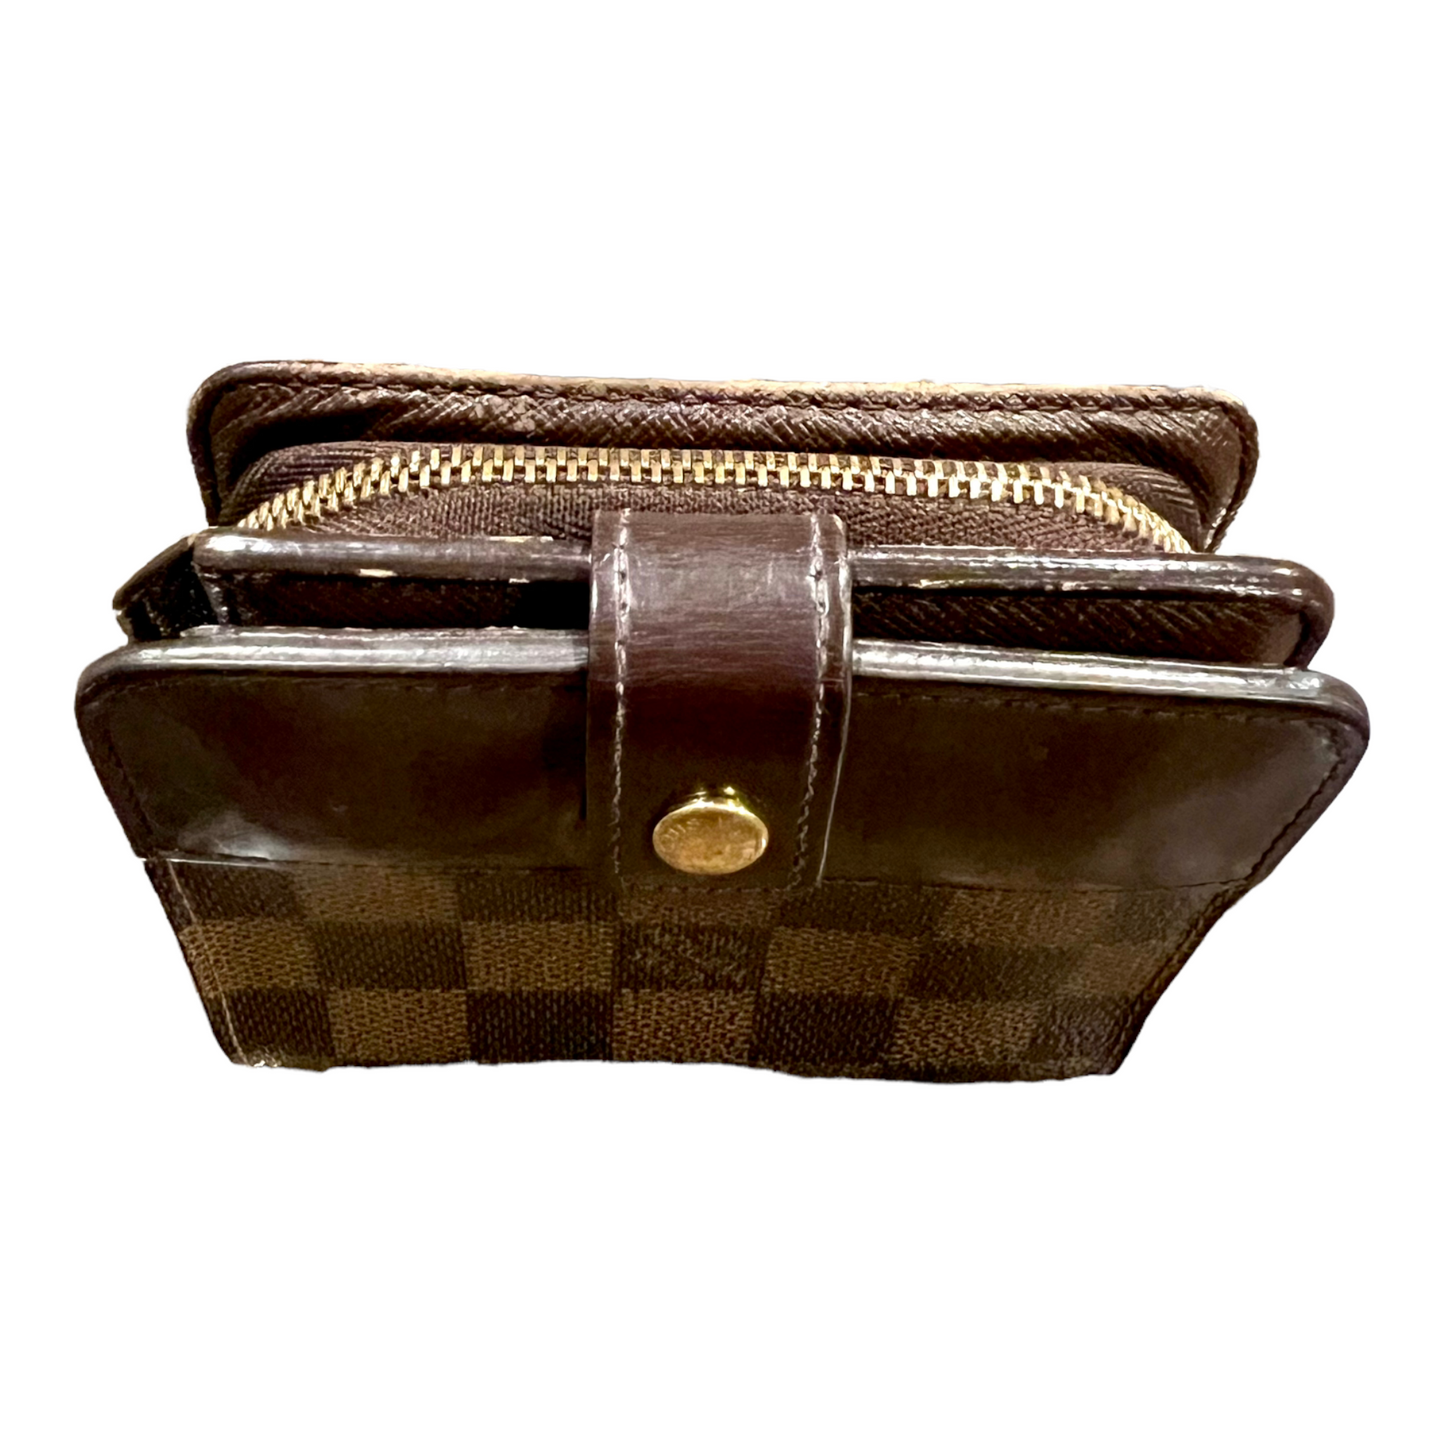 Grote Louis Vuitton zippy wallet in Damier Ebene - Garderobe